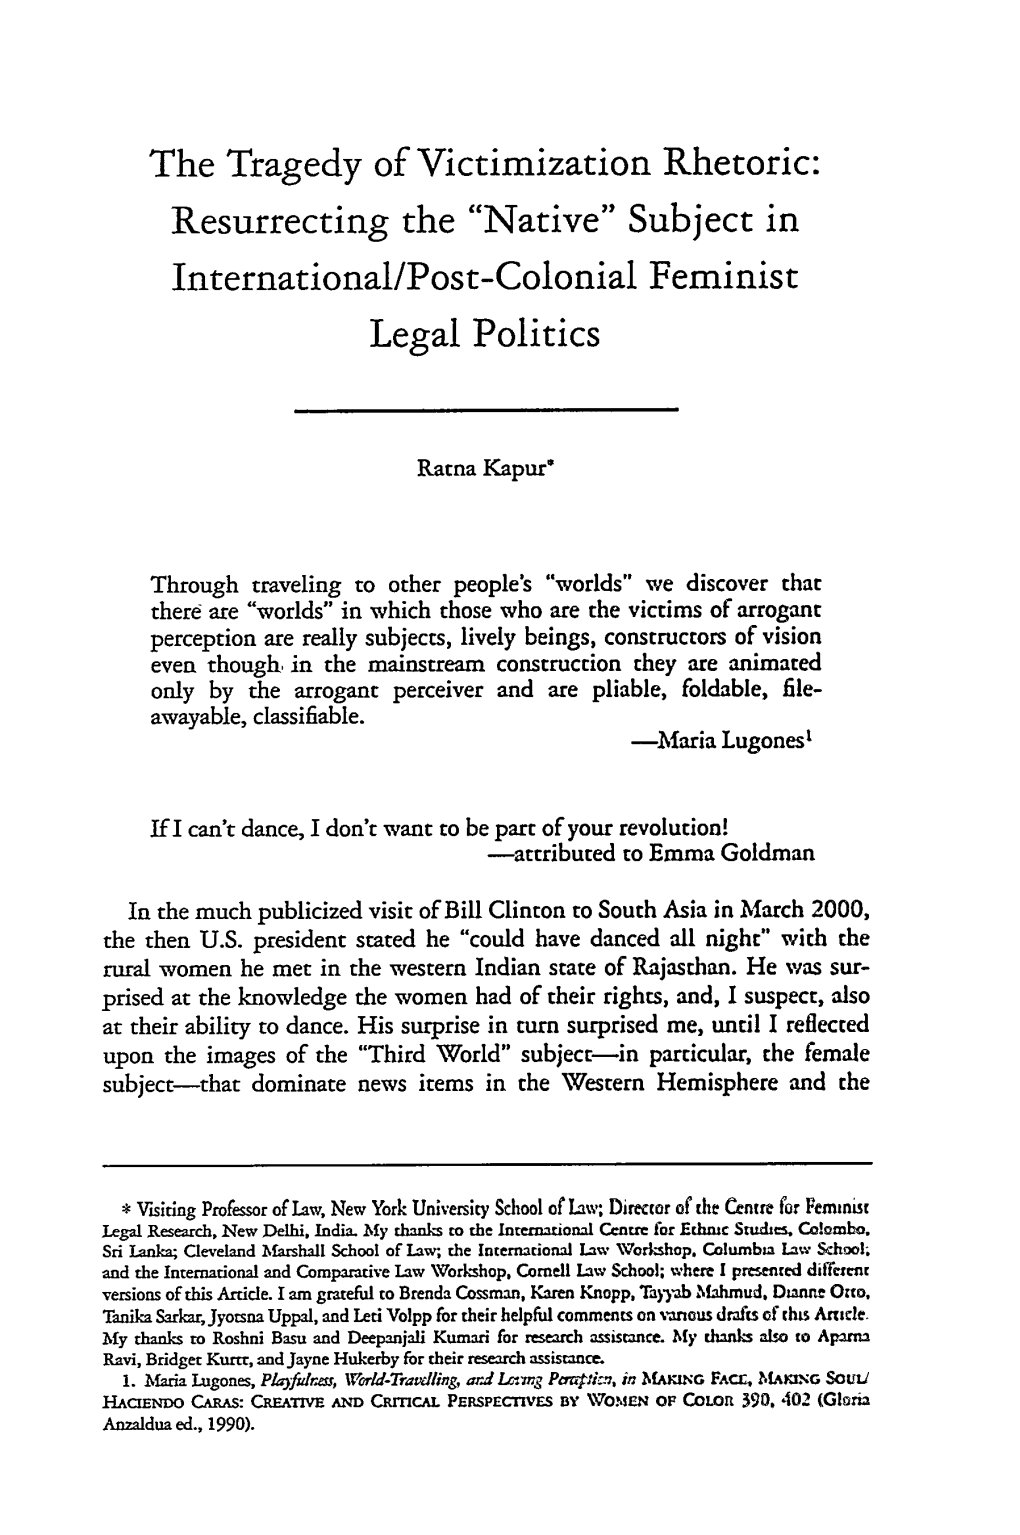 Subject in International/Post-Colonial Feminist Legal Politics